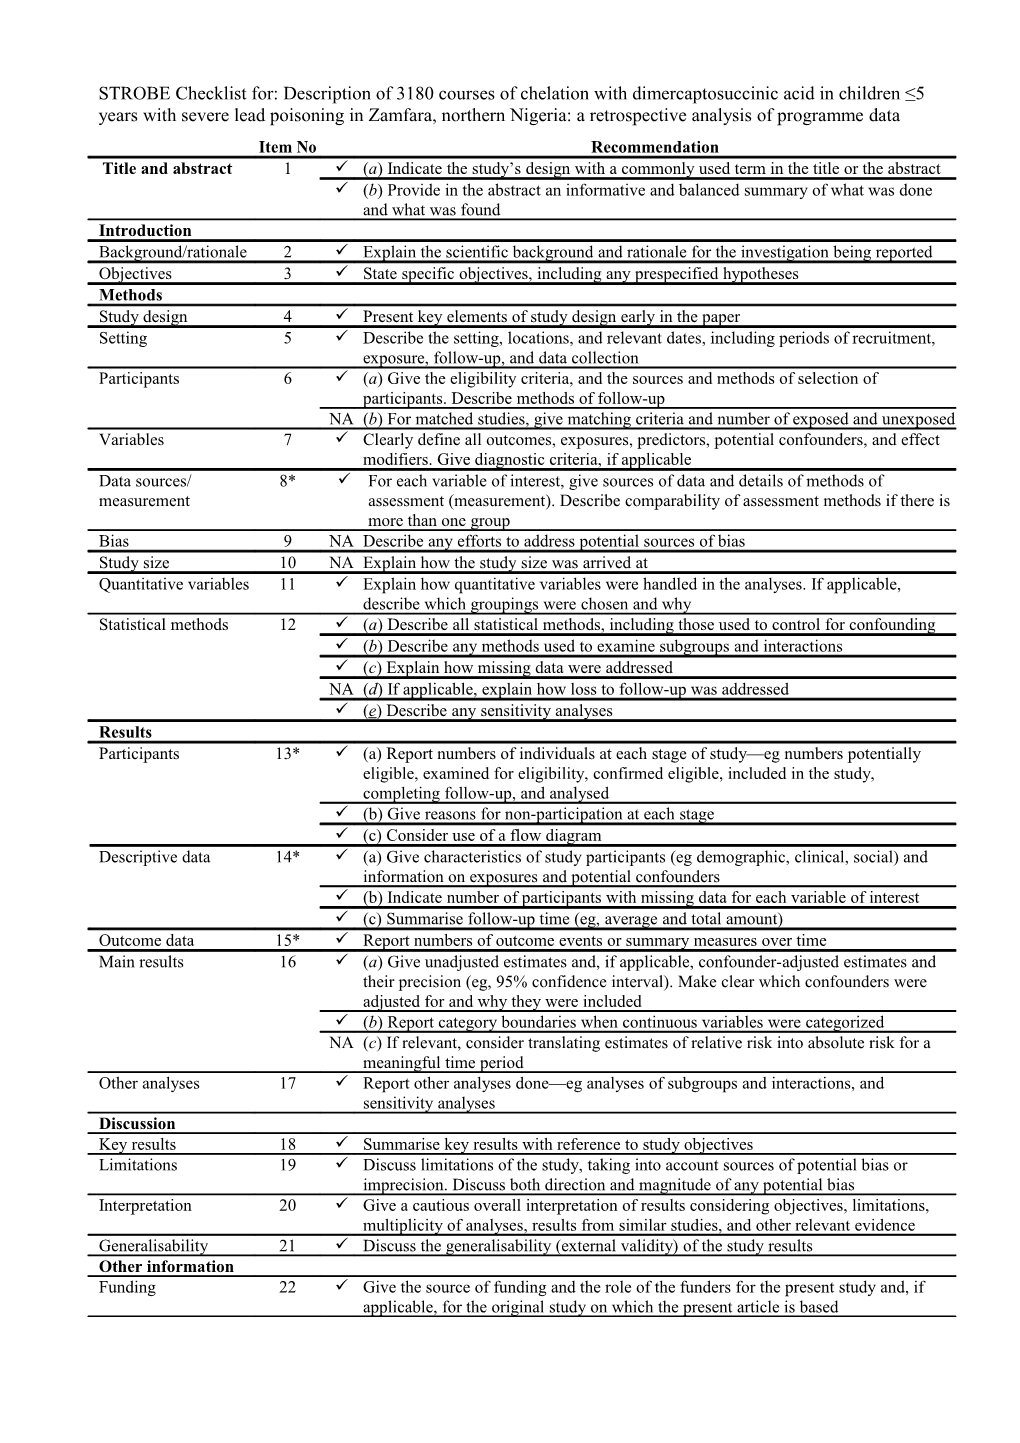 STROBE Checklist For: Description of 3180 Courses of Chelation with Dimercaptosuccinic